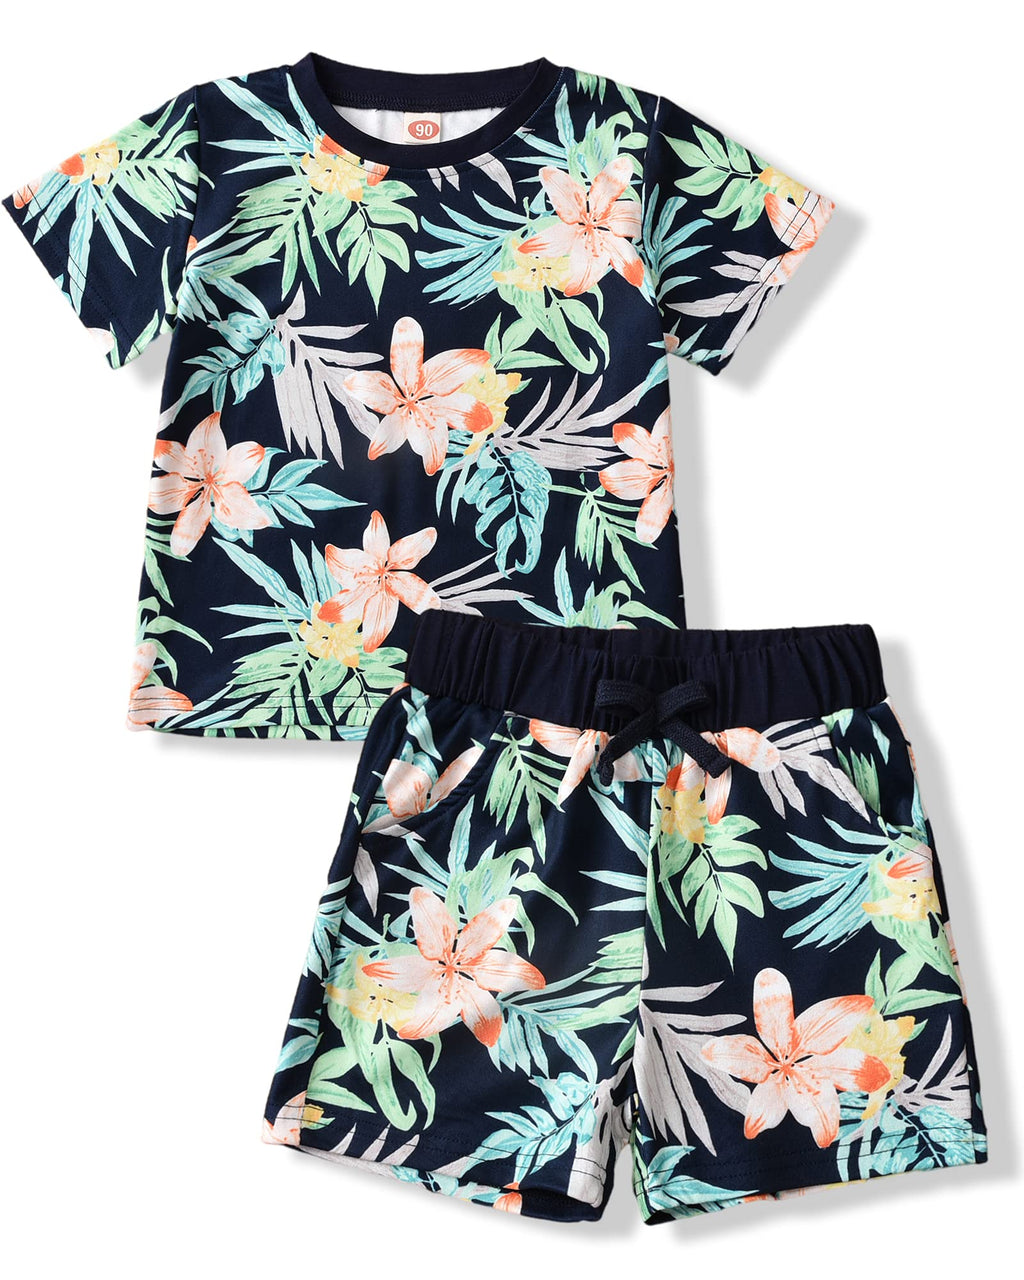 [Australia] - Toddler Little Boys Girls Summer Outfits Hawaiian Floral T-Shirt Shorts Set Beach Clothes Black 2T 